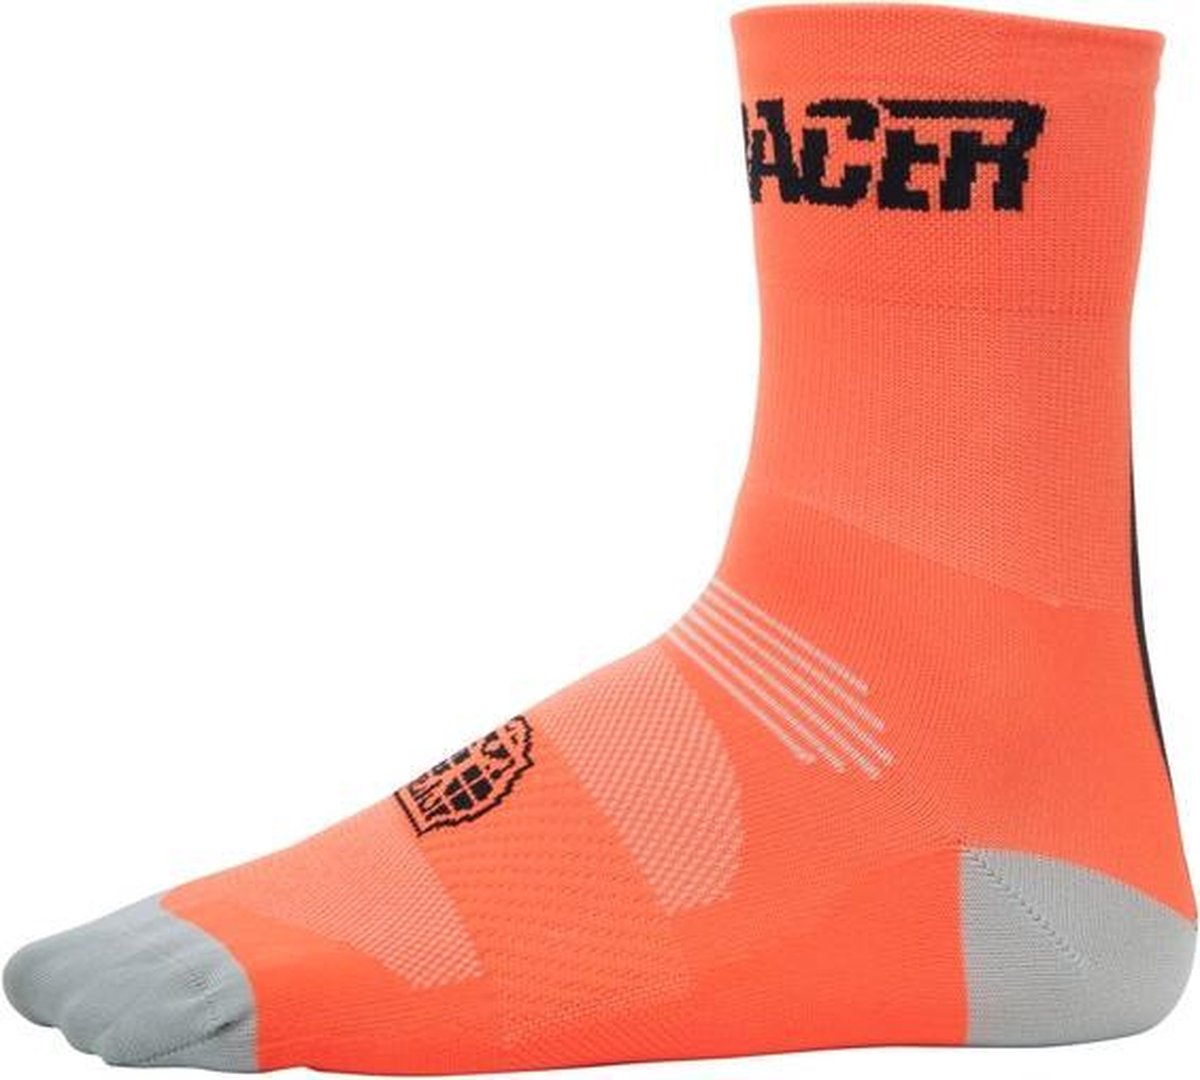 Bioracer Summer Socks Orange Fluo Size S - Bioracer